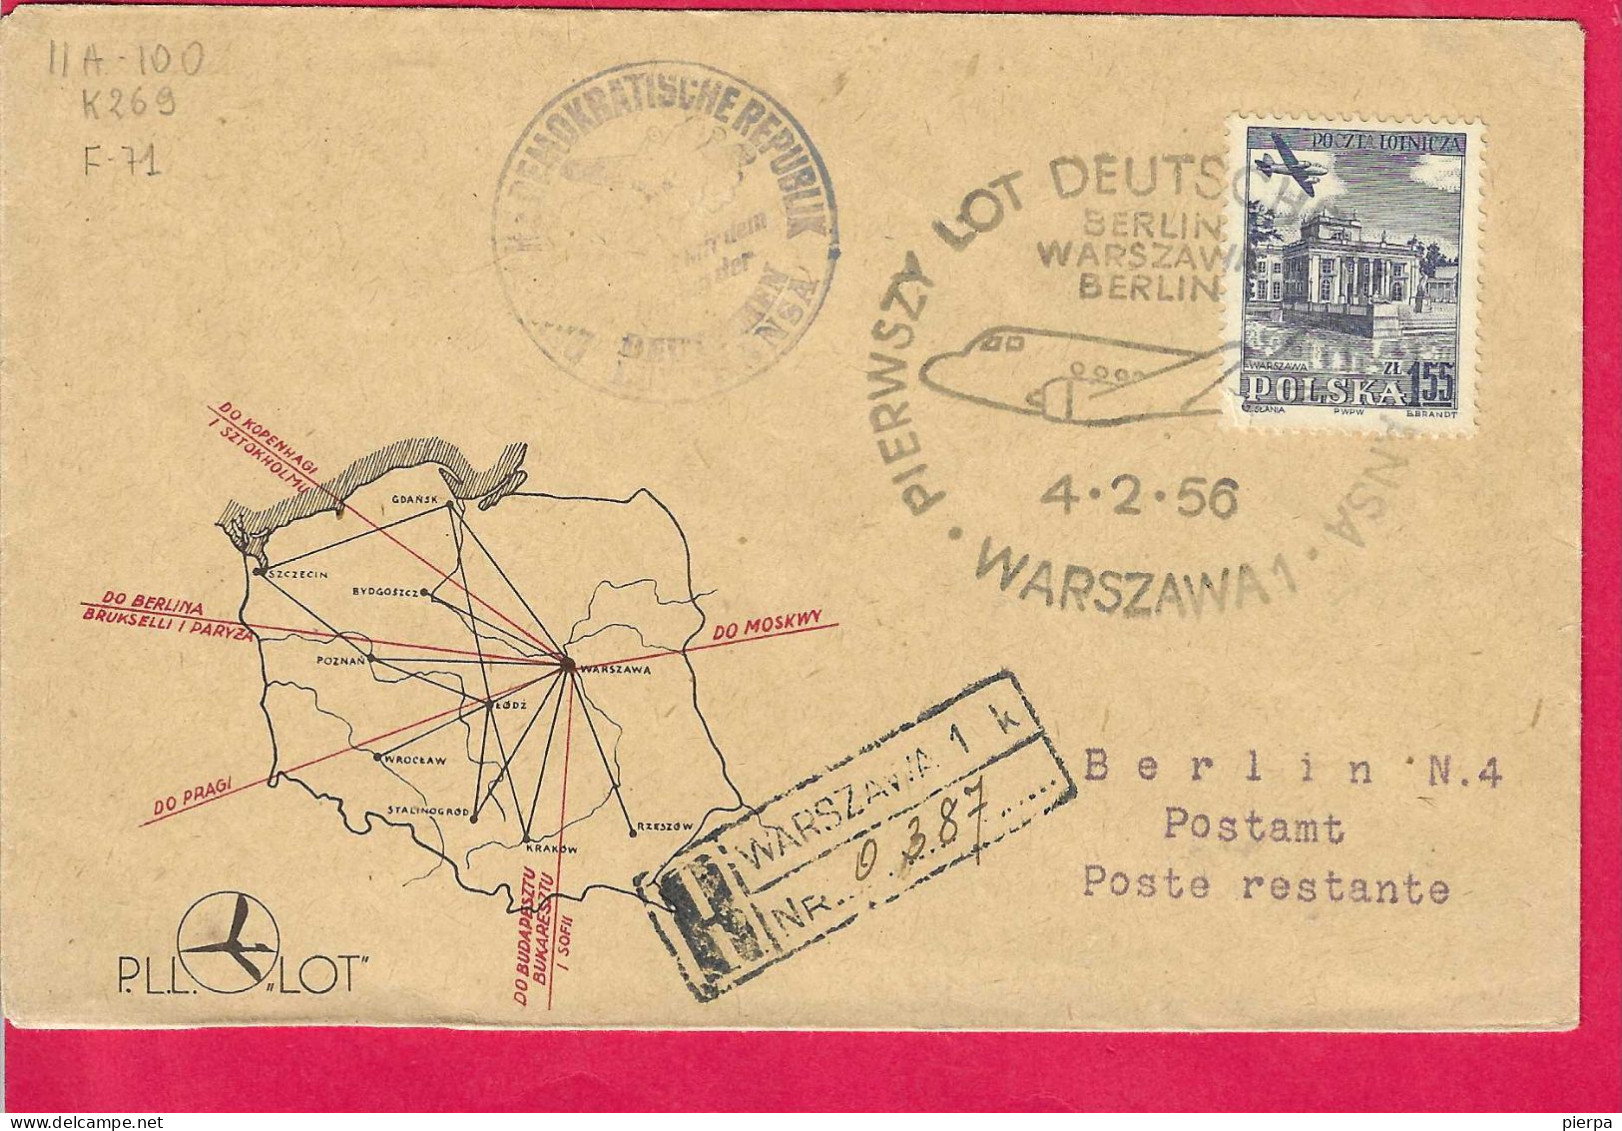 POLAND - LOT FLIGHT BERLIN/WARSZAWA/BERLIN *4.2.56* ON OFFICIAL COVER - Aviones